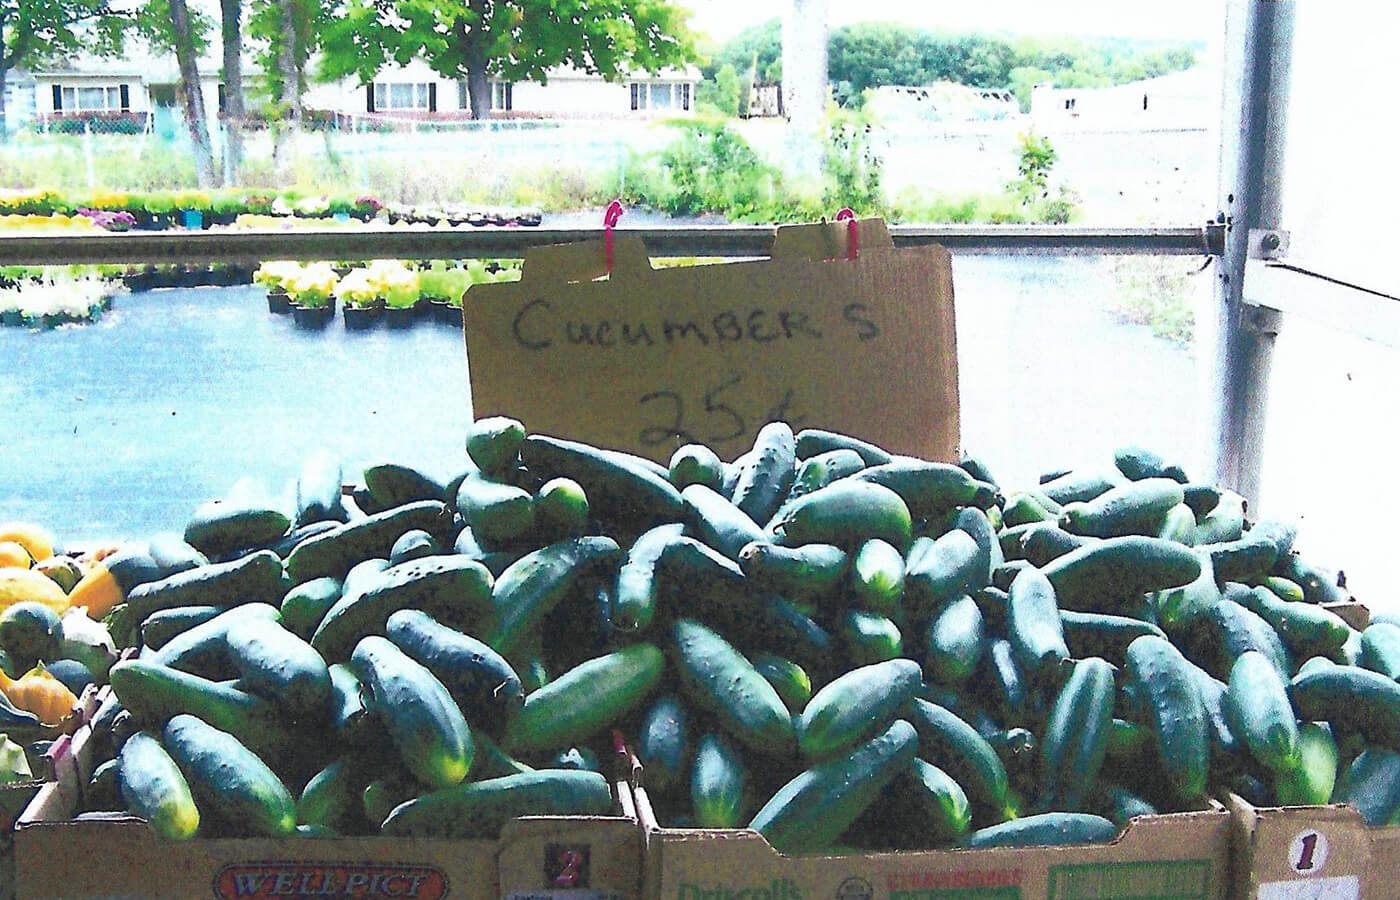 Homegrown cucumbers